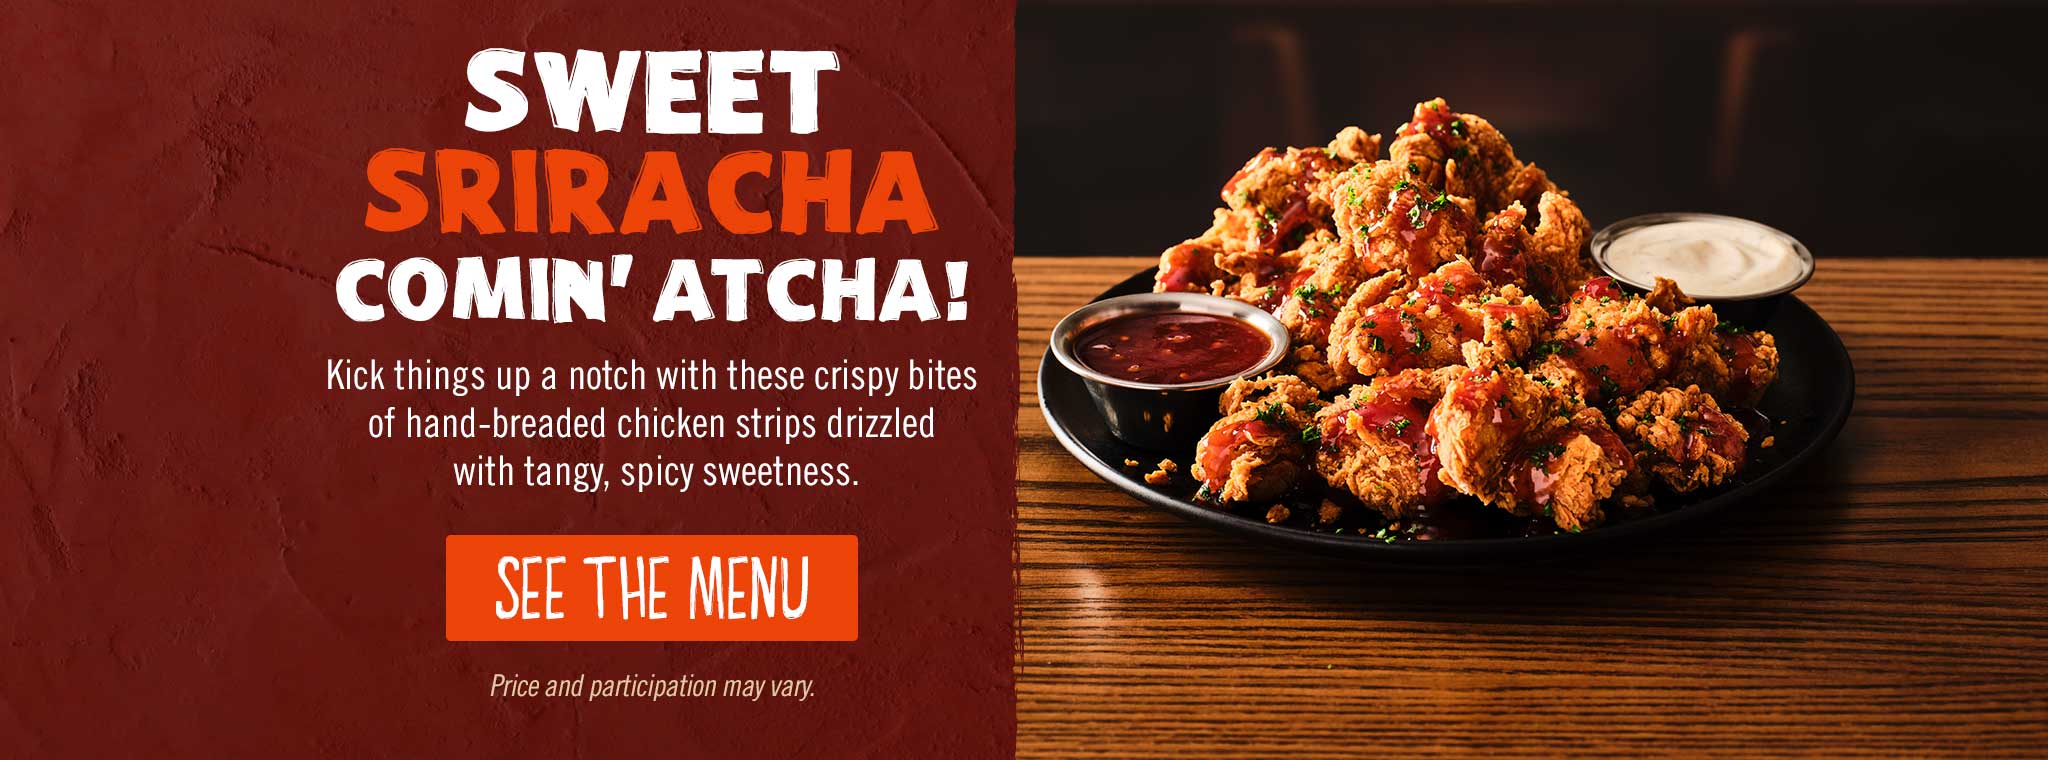 Sweet Sriracha Comin' Atcha! SEE THE MENU. Price and participation may vary.